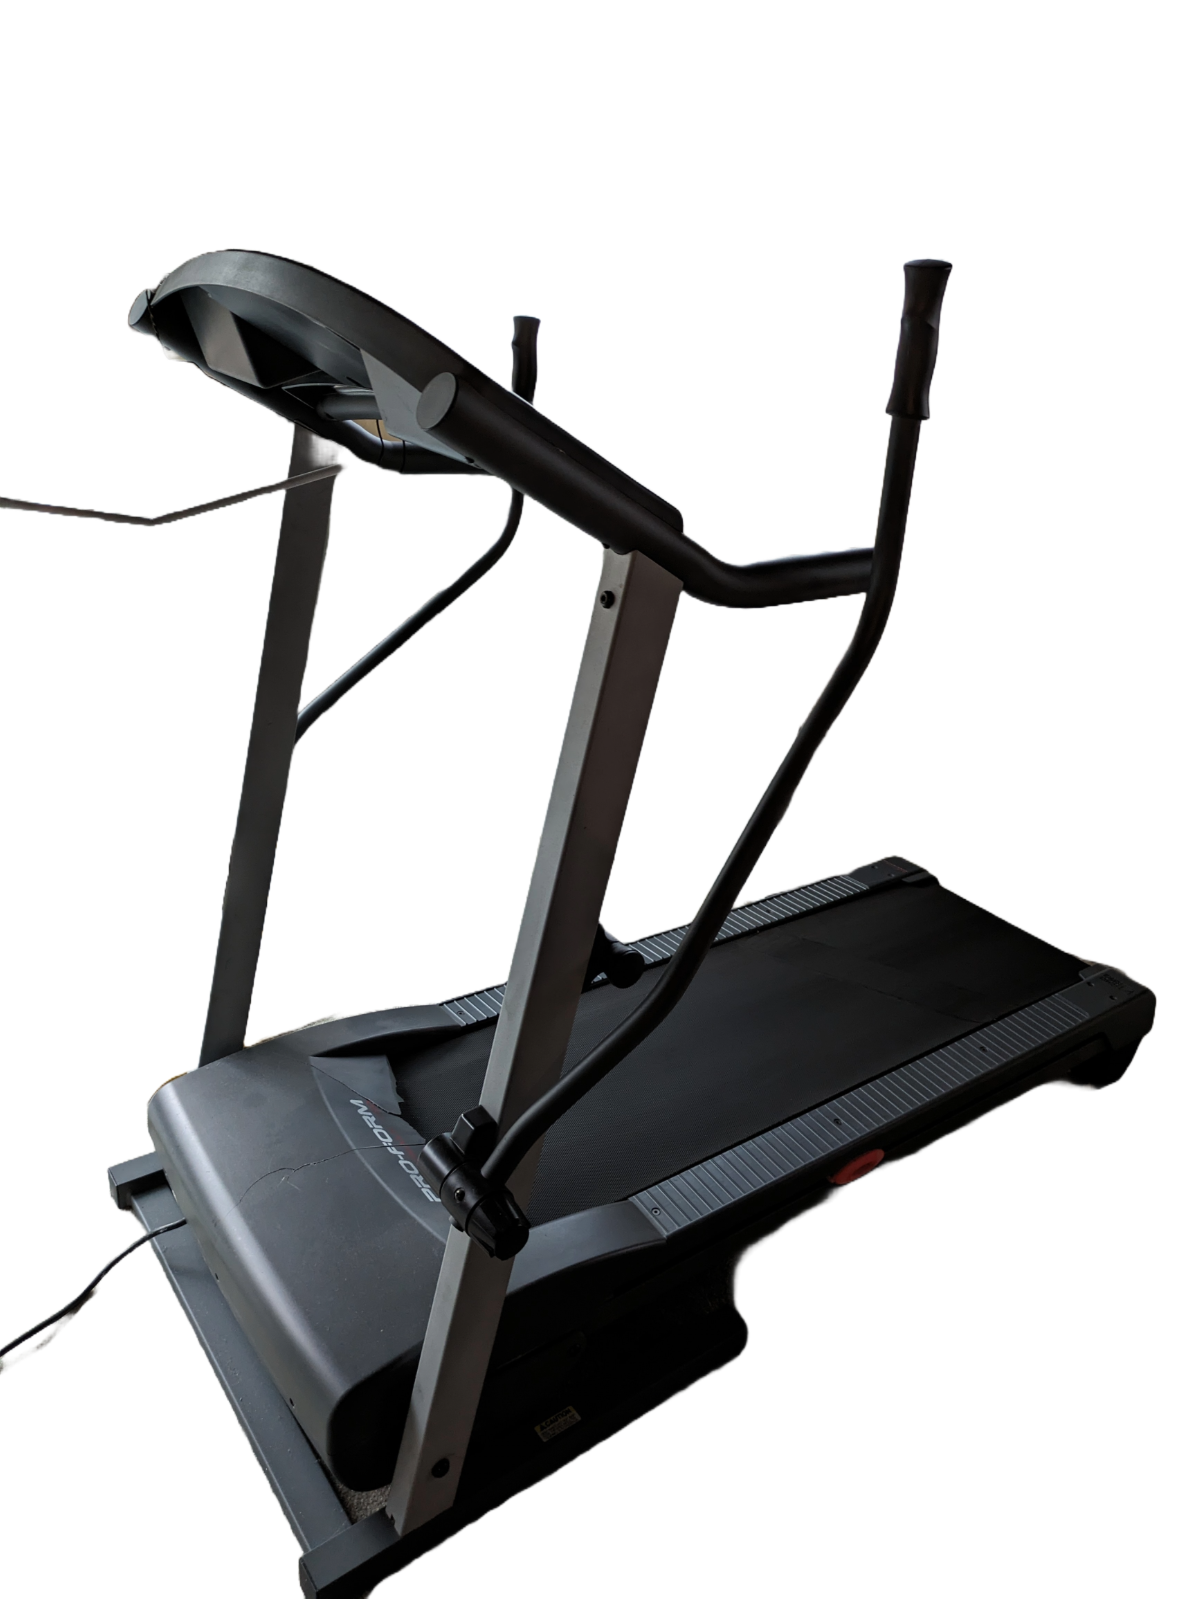 Proform Crosswalk 380 treadmill, good working condition